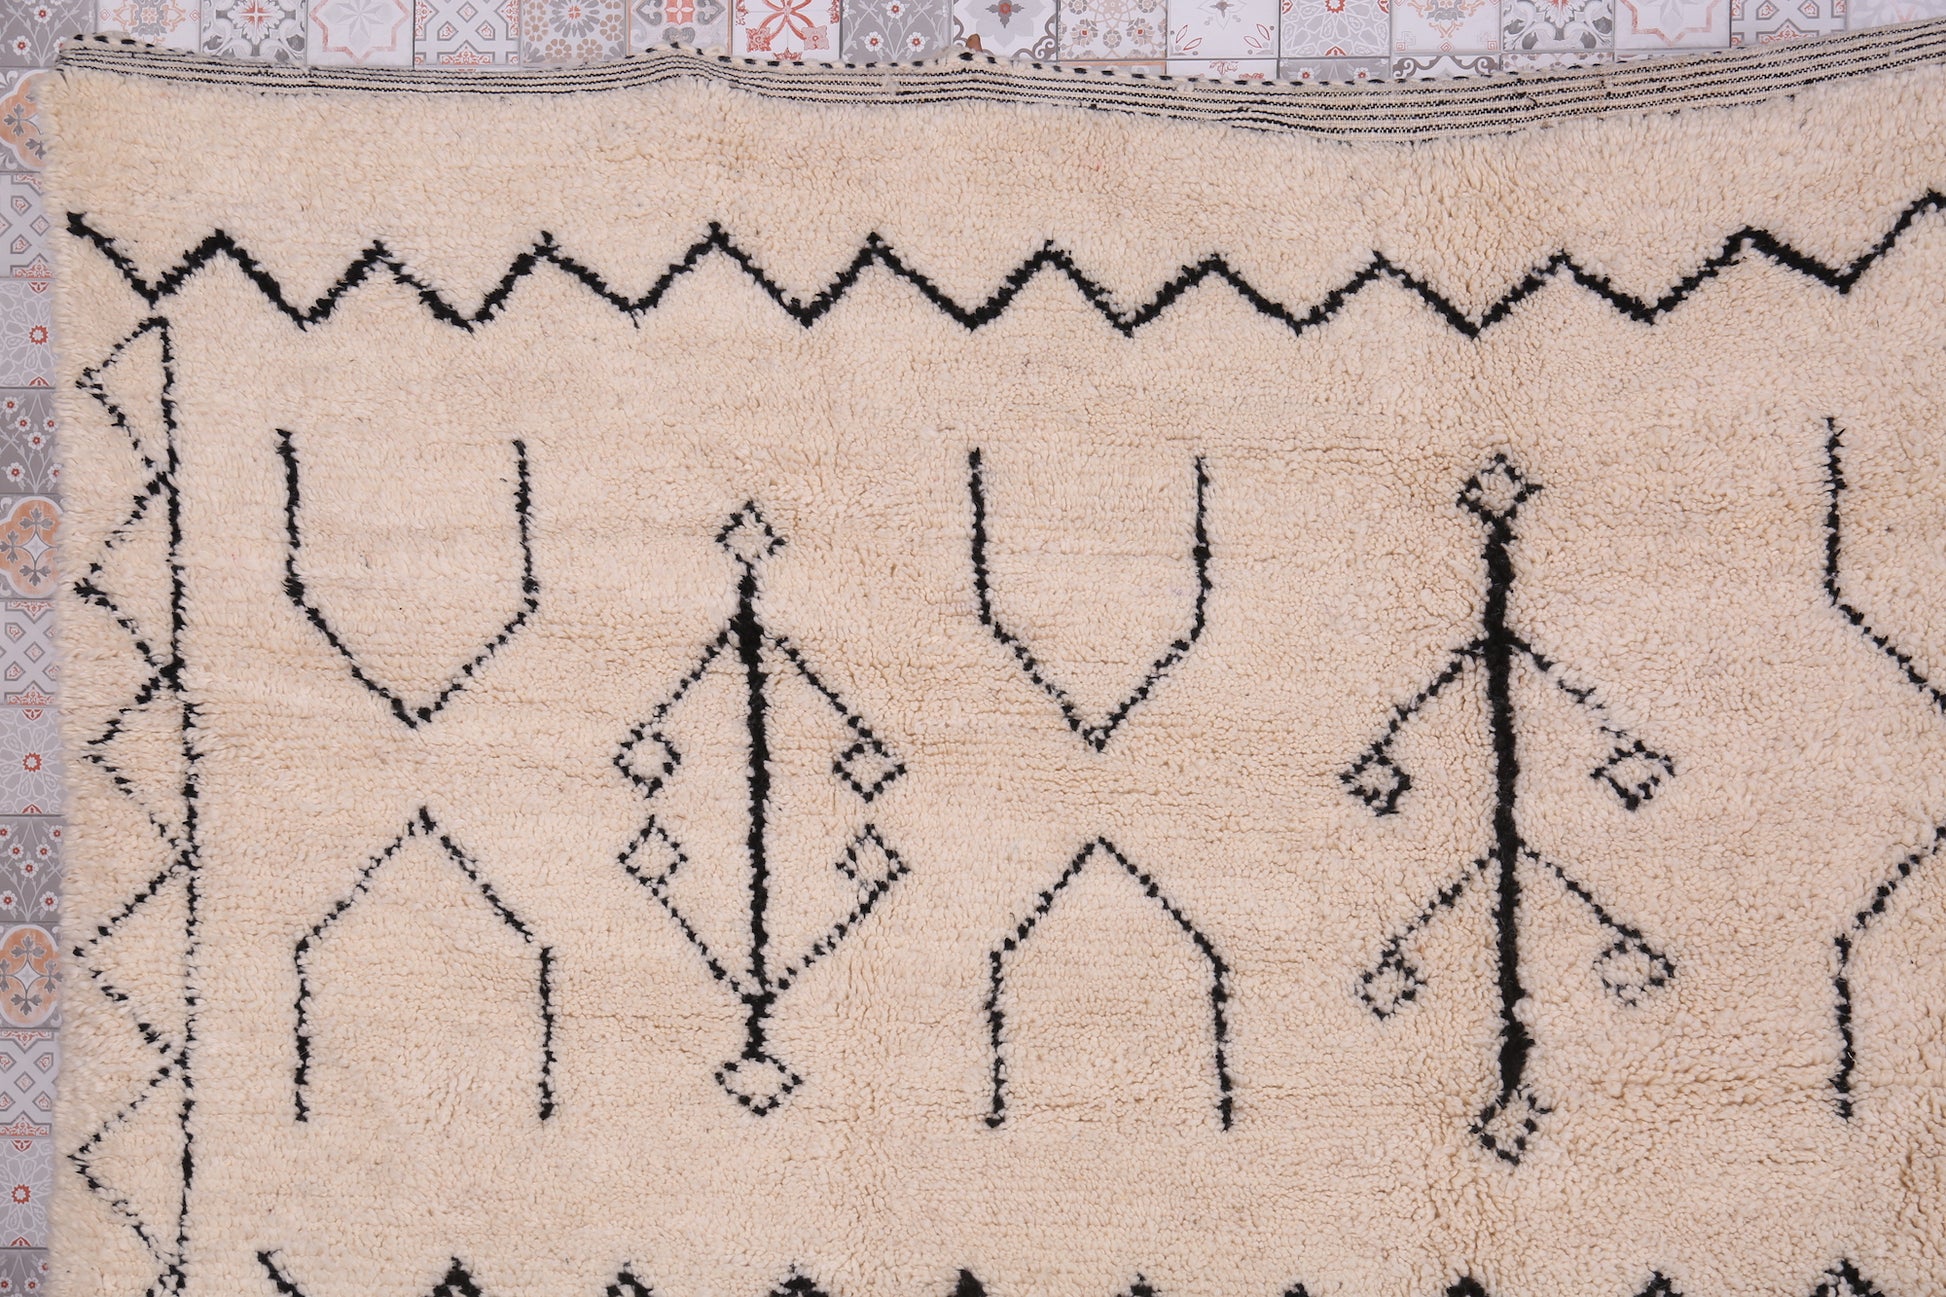 Custom Berber rug - Hand woven moroccan rug